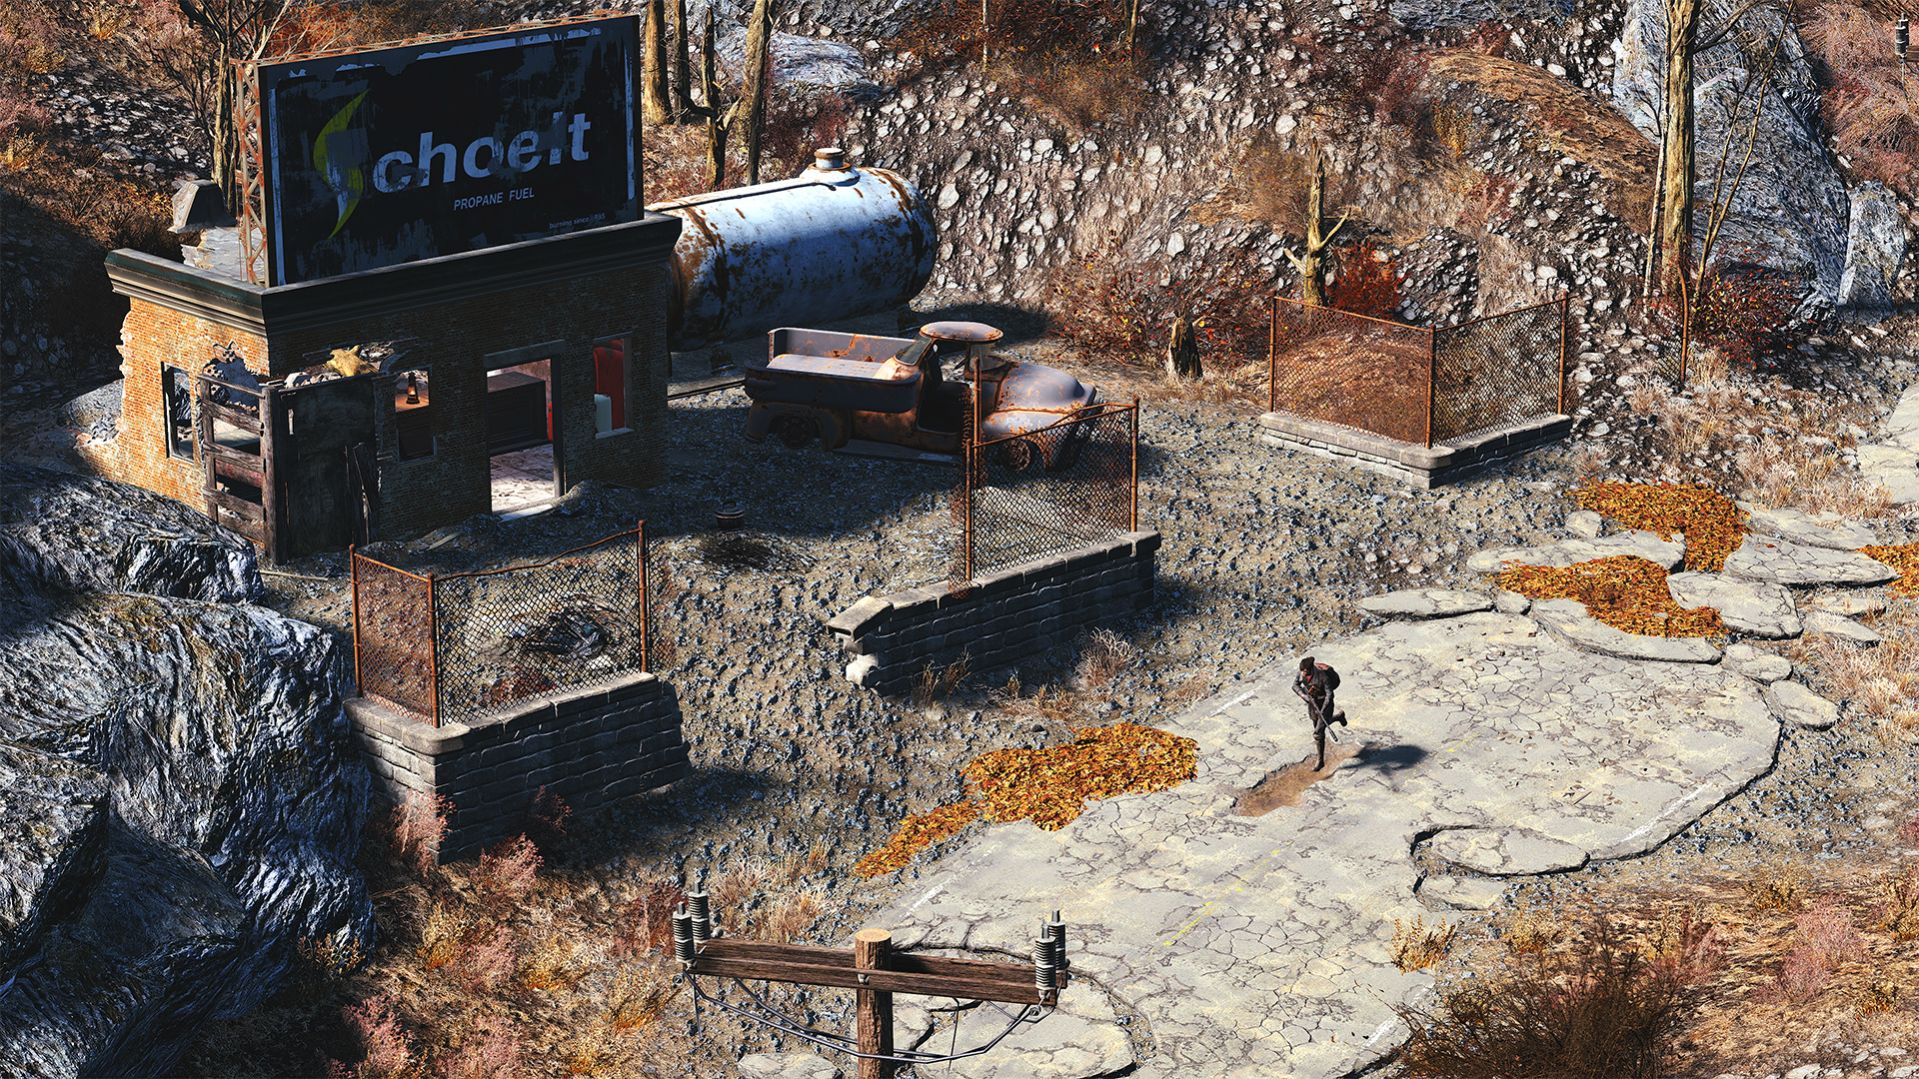 Handy-Wallpaper Computerspiele, Ausfallen, Fallout 4 kostenlos herunterladen.